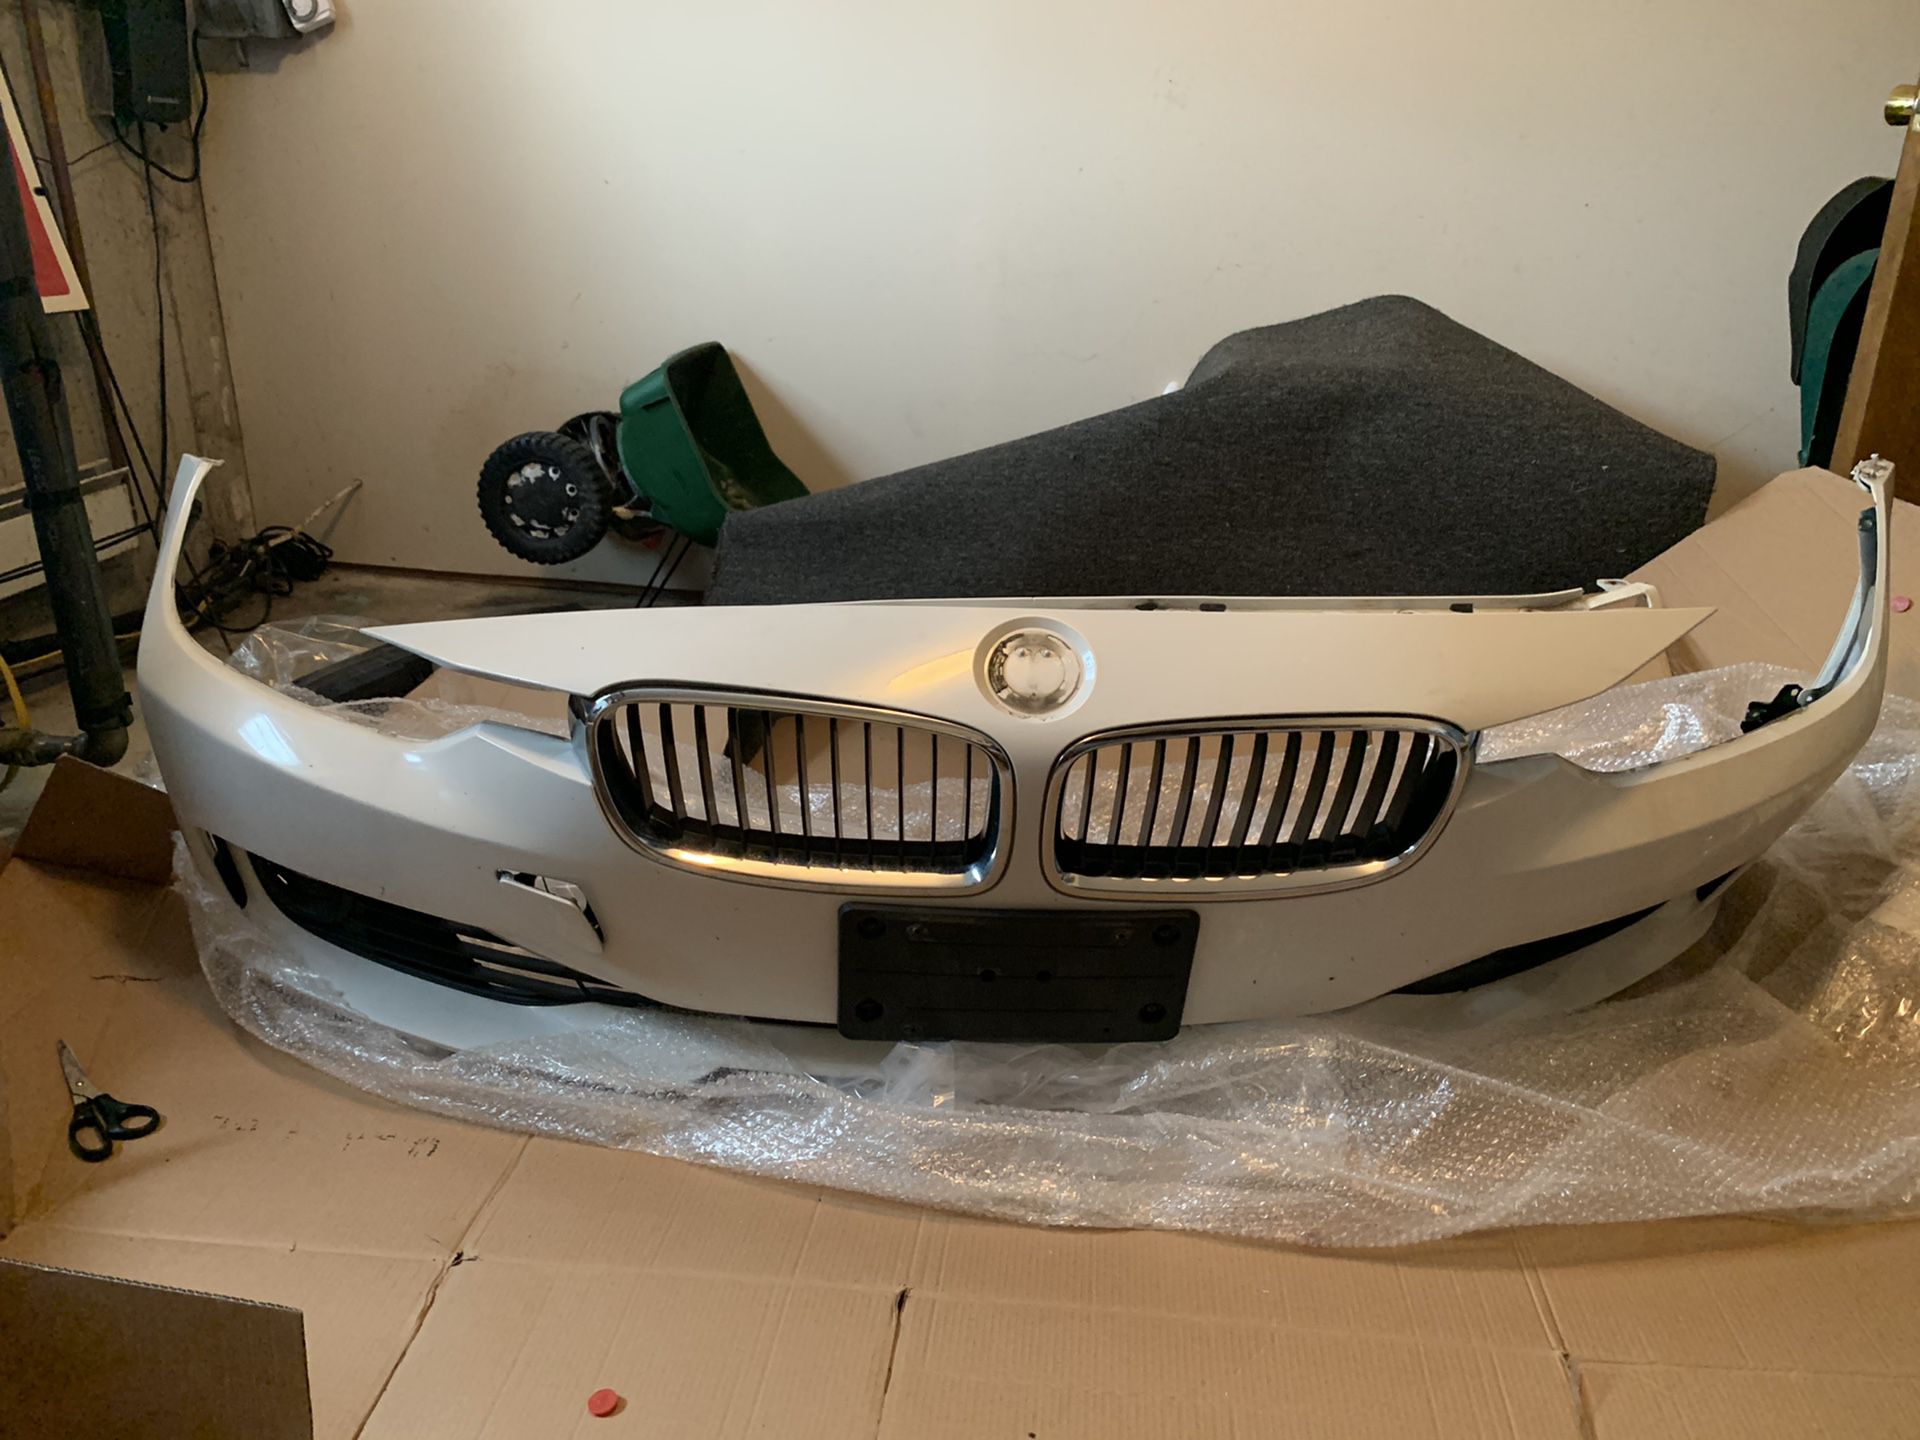 OEM BMW F30 front bumper